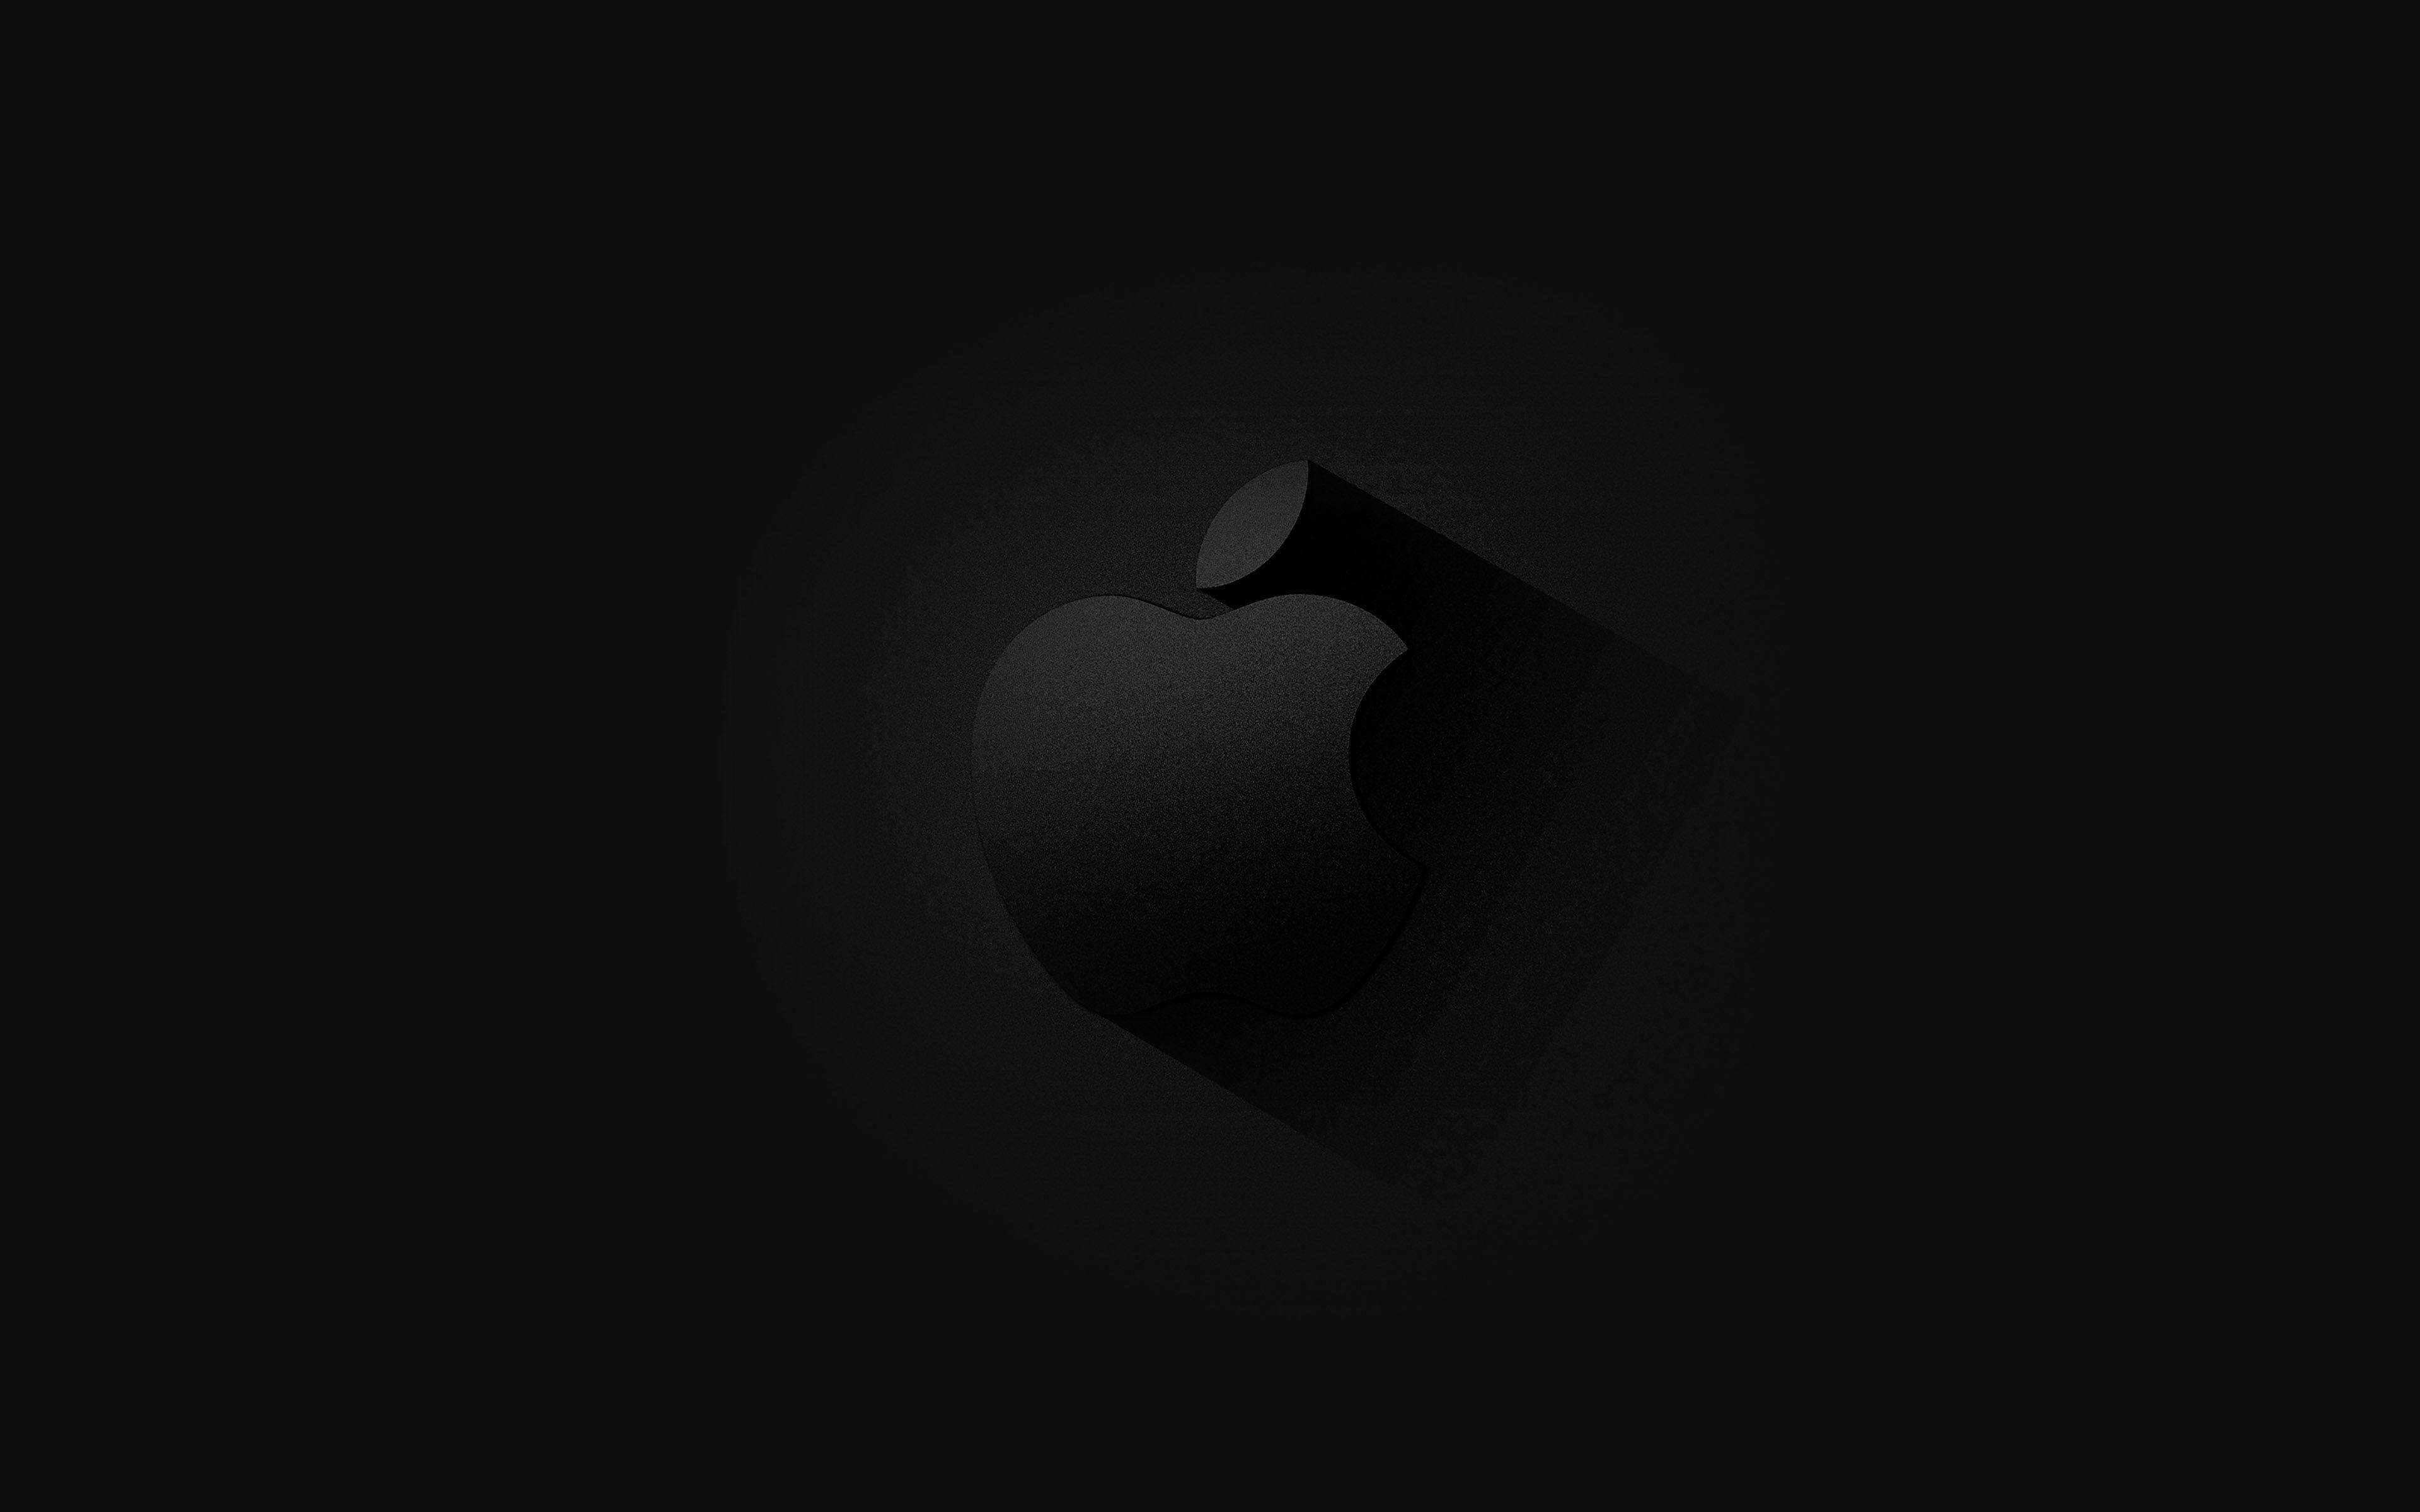 my mac desktop screen is black